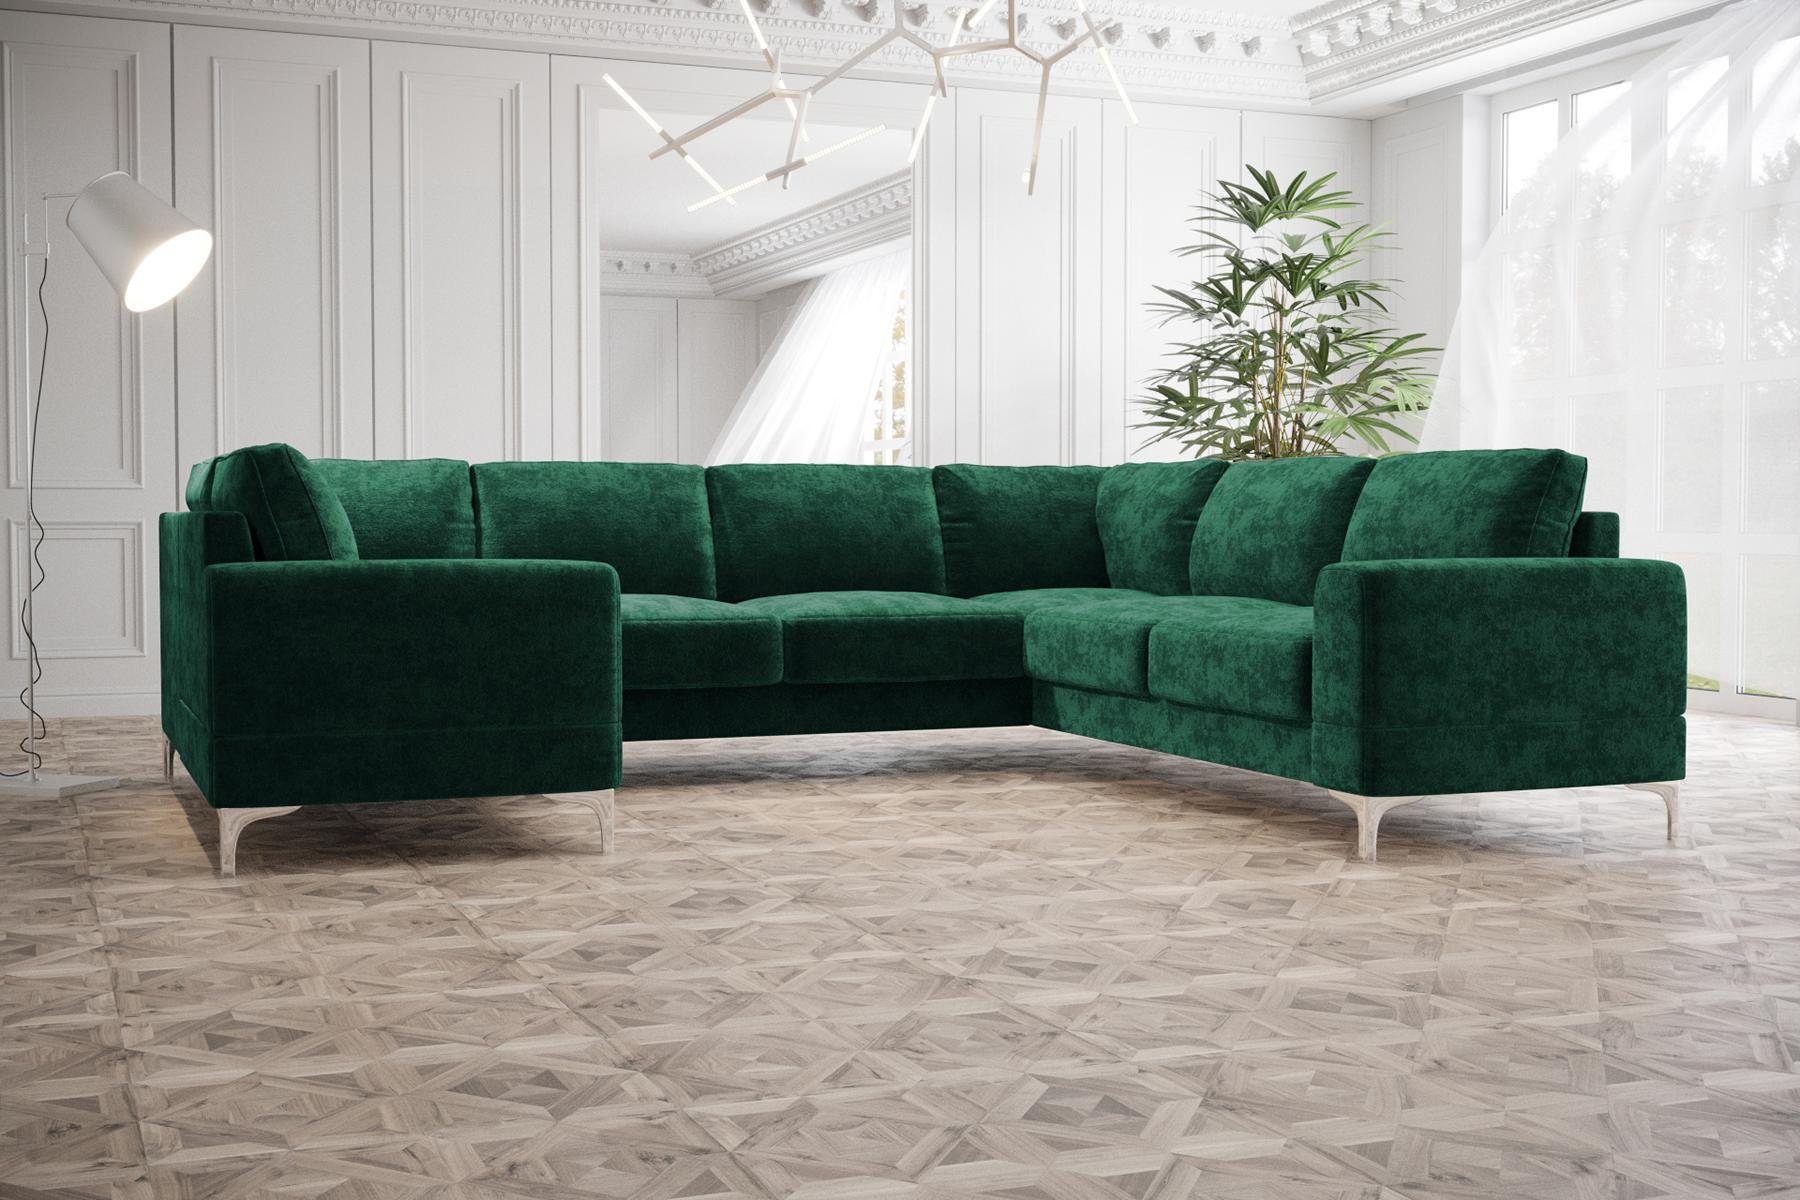 JVmoebel Ecksofa Wohnlandschaft Polsterecke Couch Neu, in Made Grün Sofas Sofa Europe